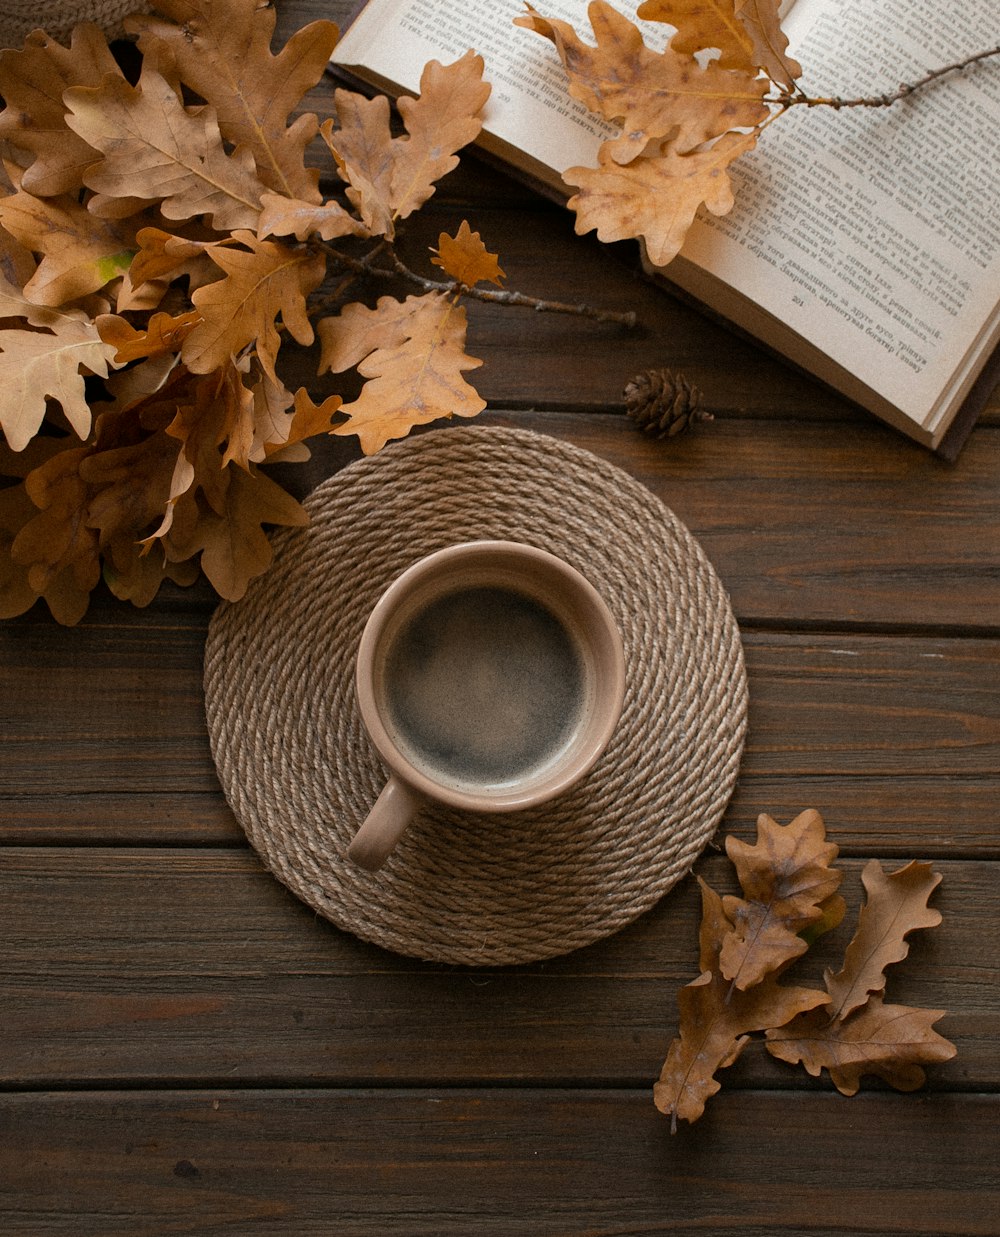 white ceramic mug on wicker saucer beside books with leaves